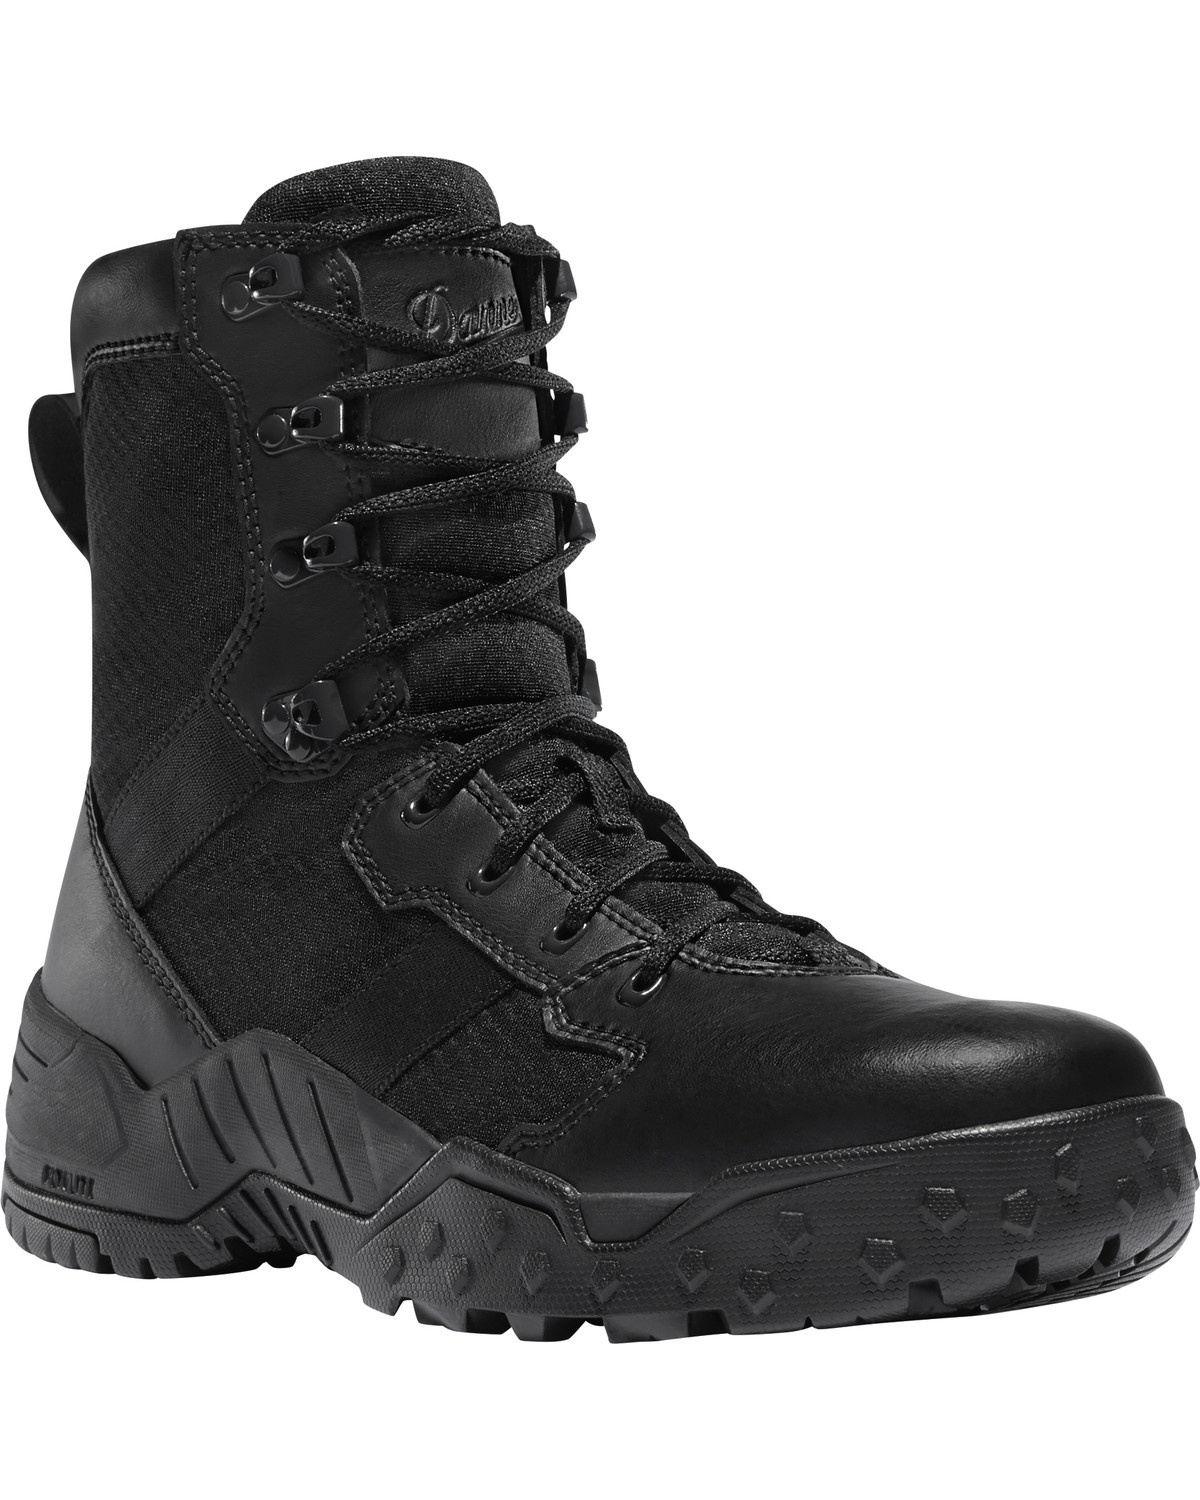 Danner Men's Black Scorch Side-Zip 8" Tactical Boots - Round Toe